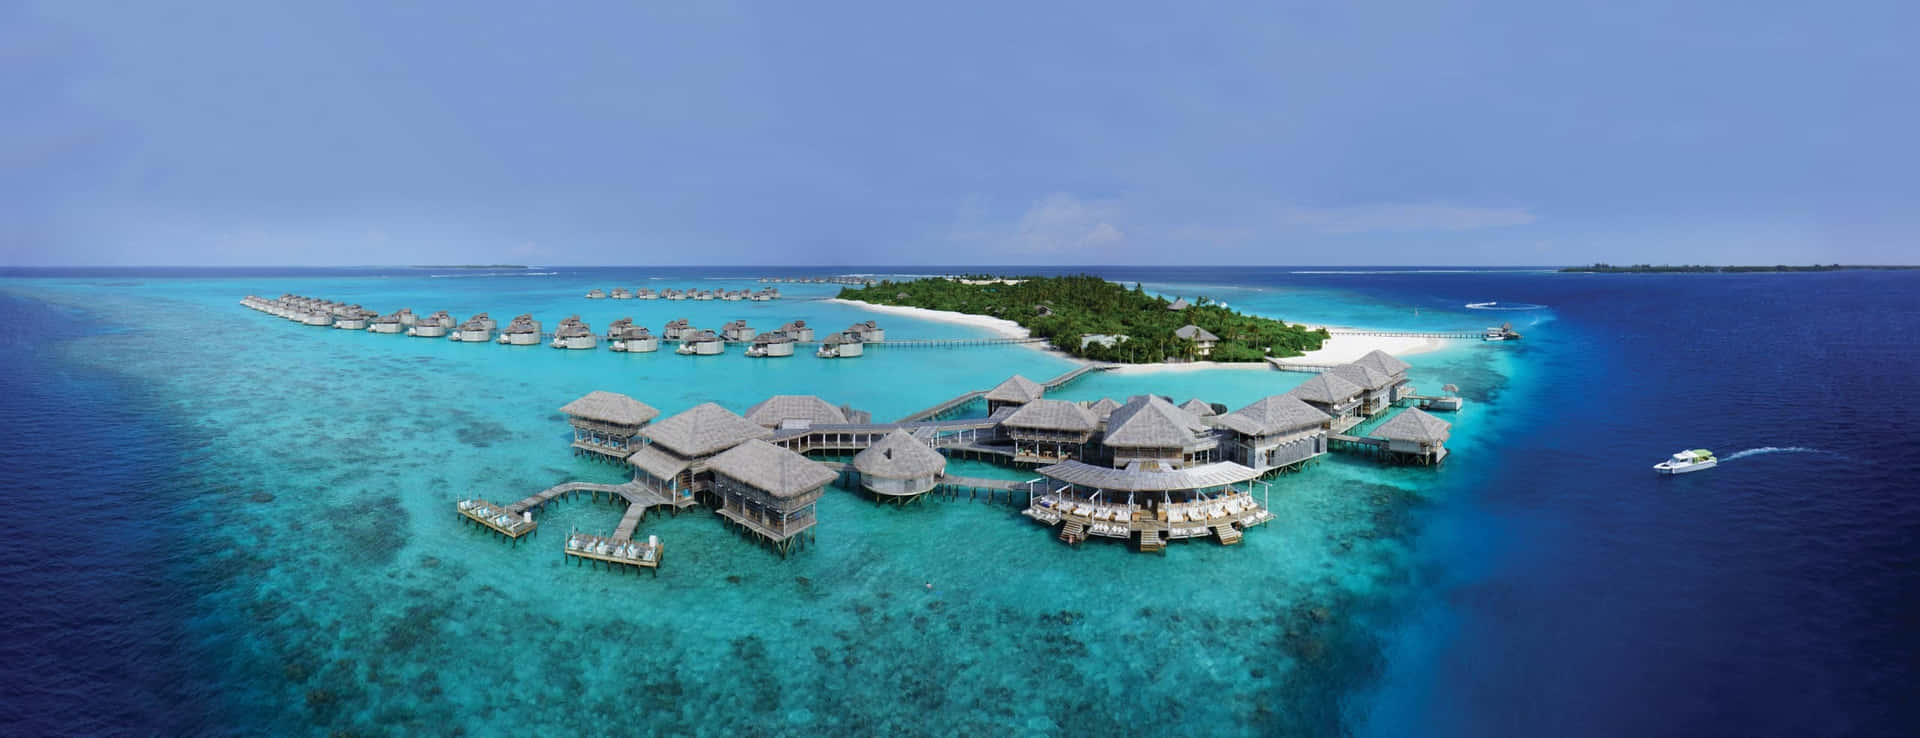 Enjoy the beautiful view of Maldives